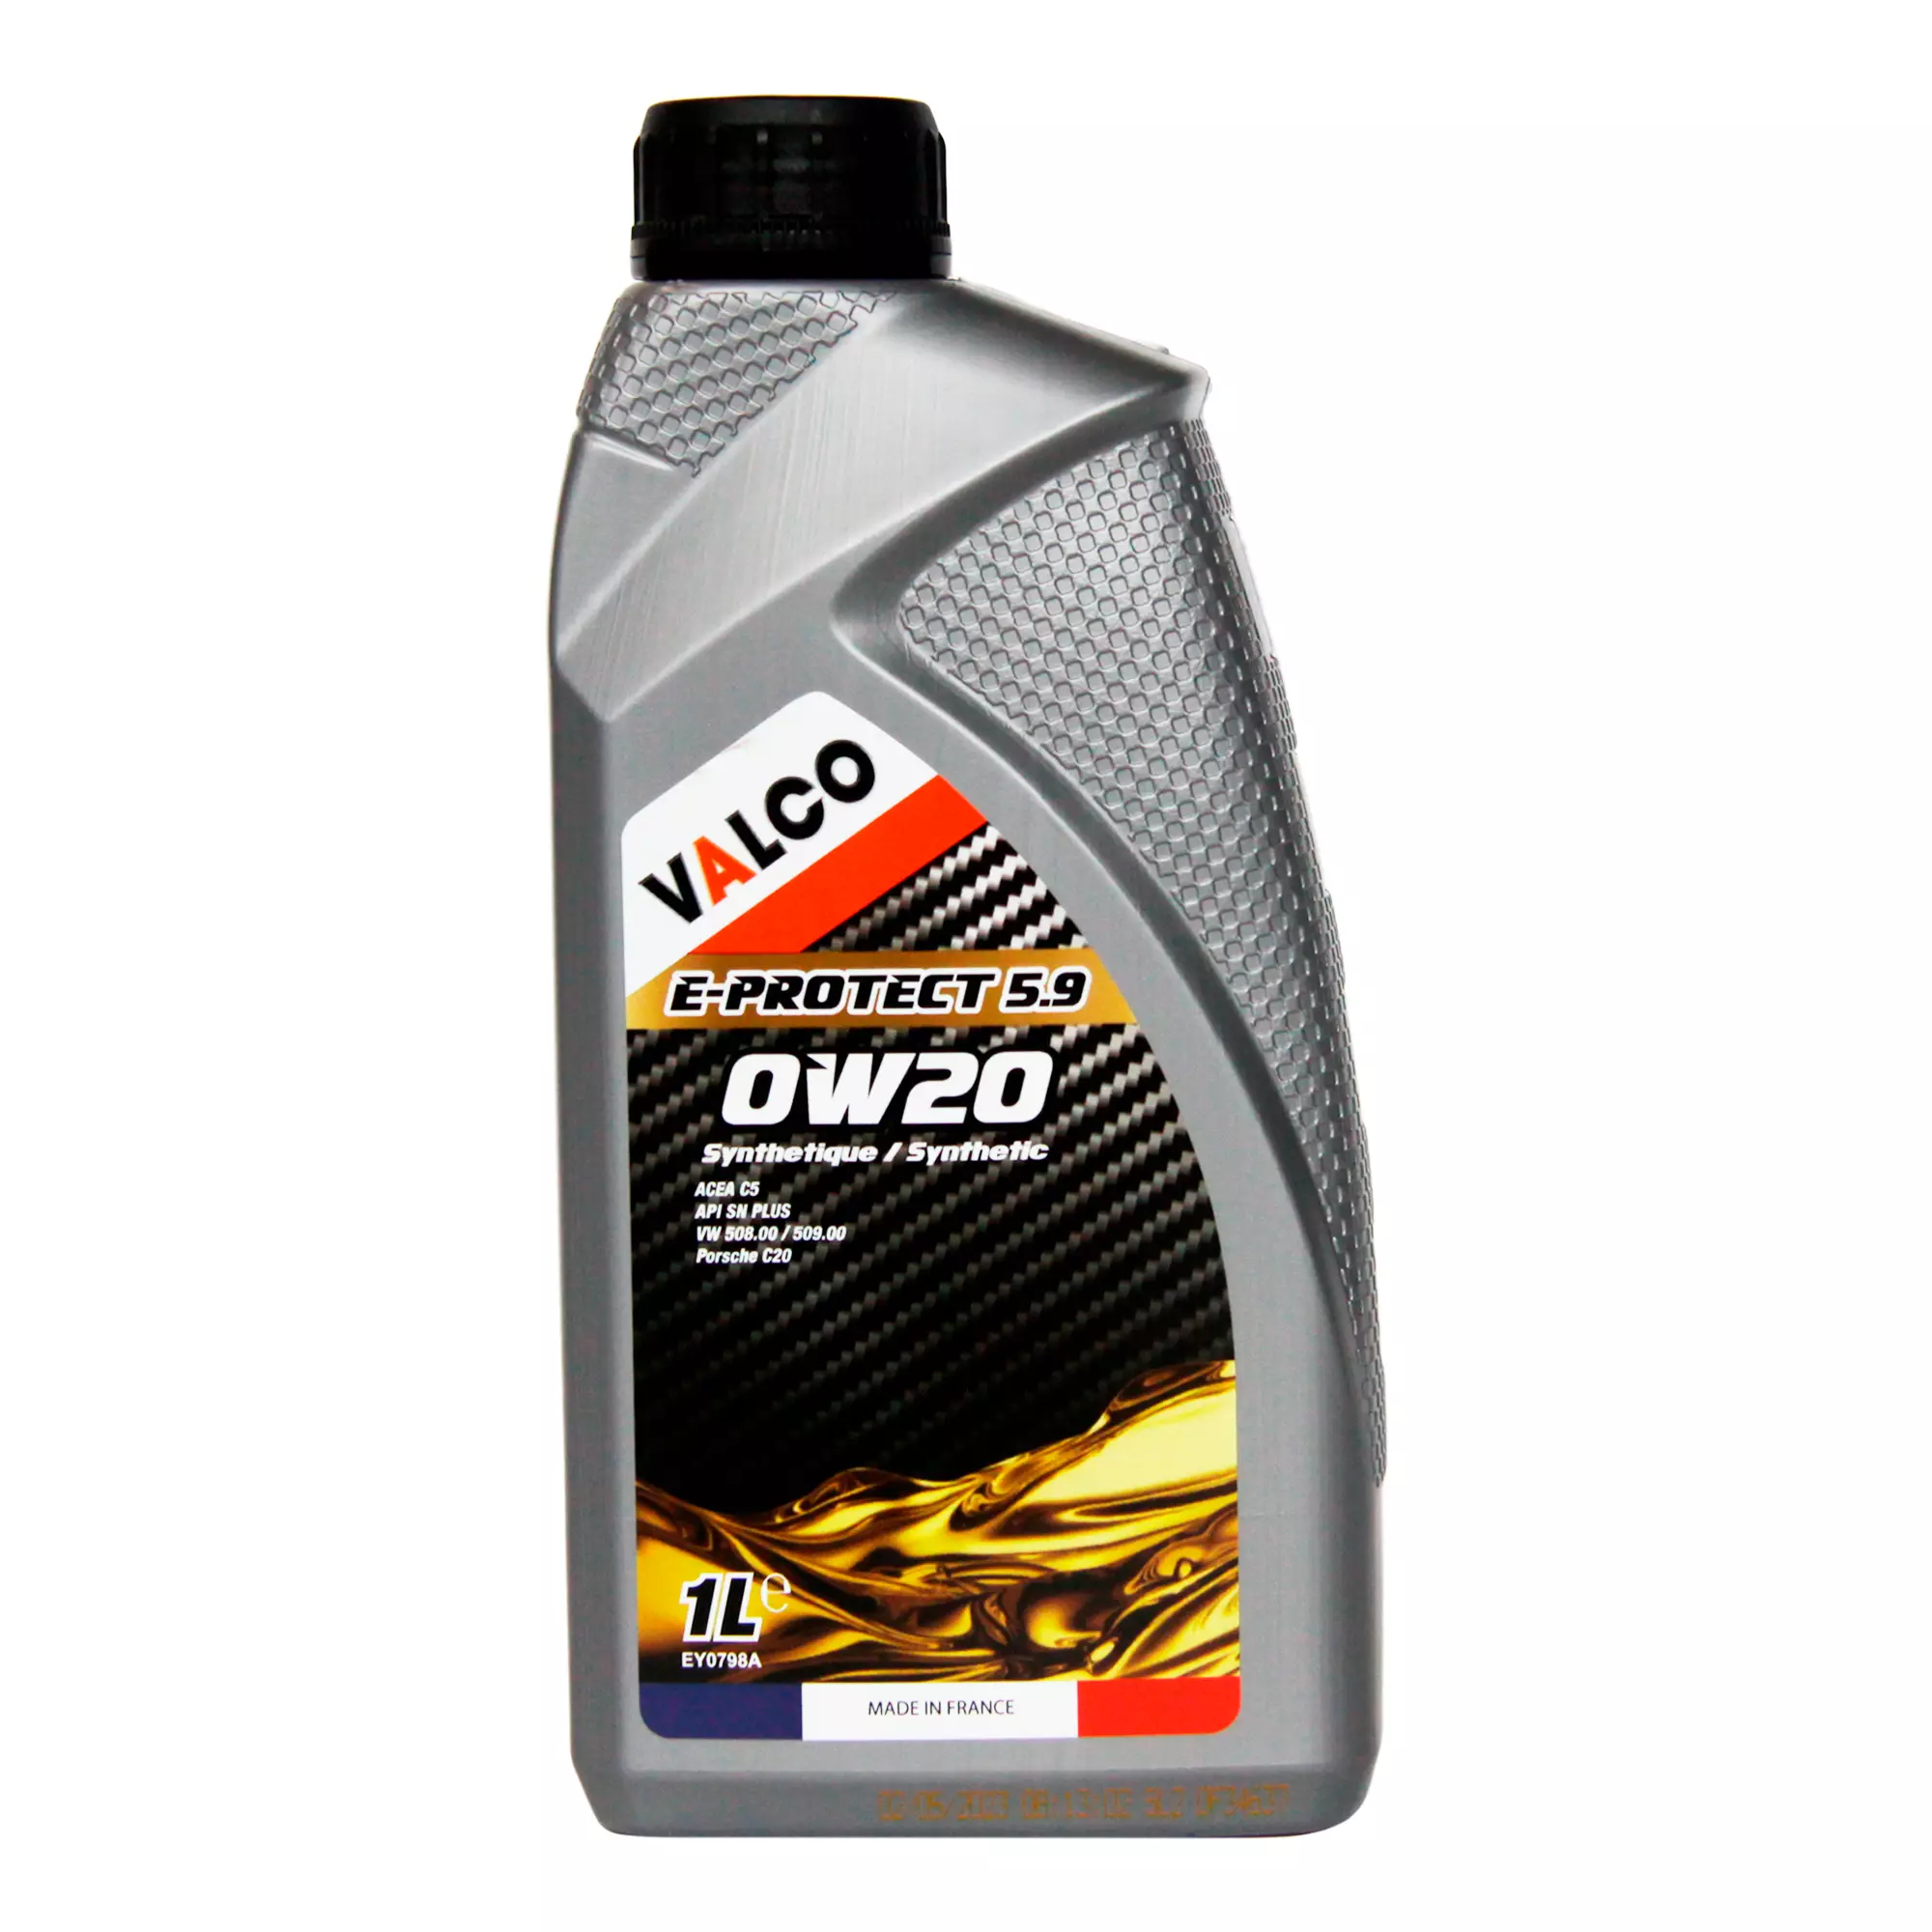 Моторное масло Valco E-PROTECT 5.9 0W-20 1л (PF017453)